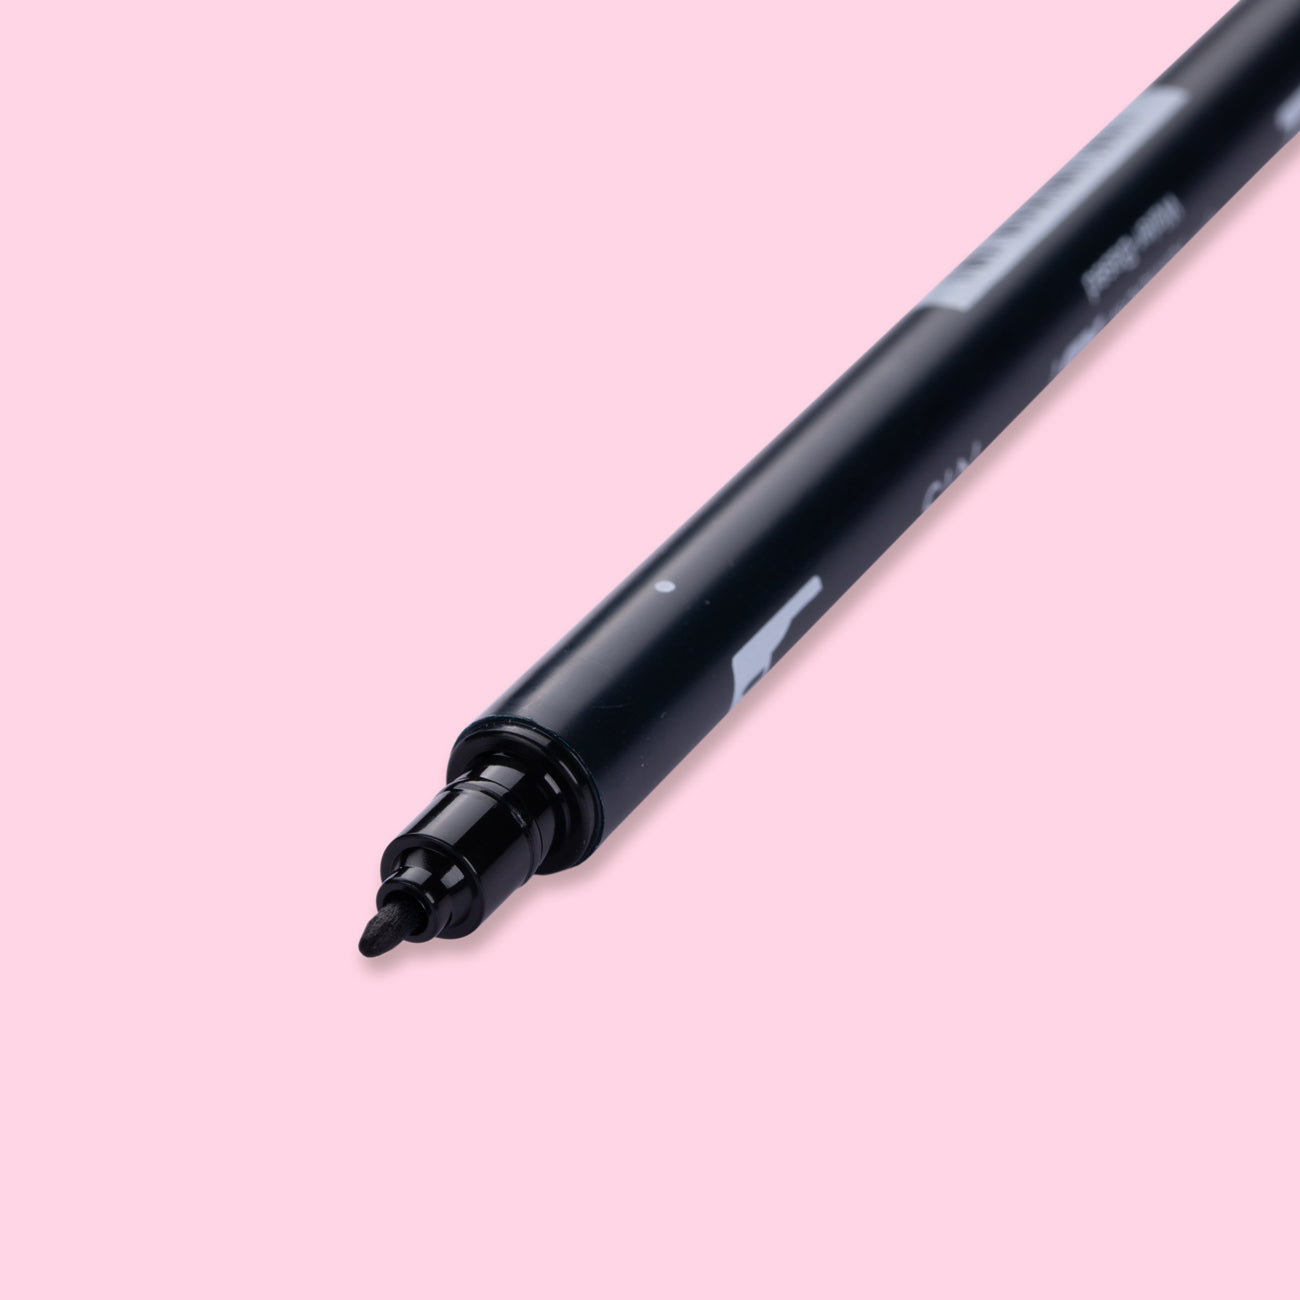 Tombow Dual Brush Pen Grayscale - N15 - Black